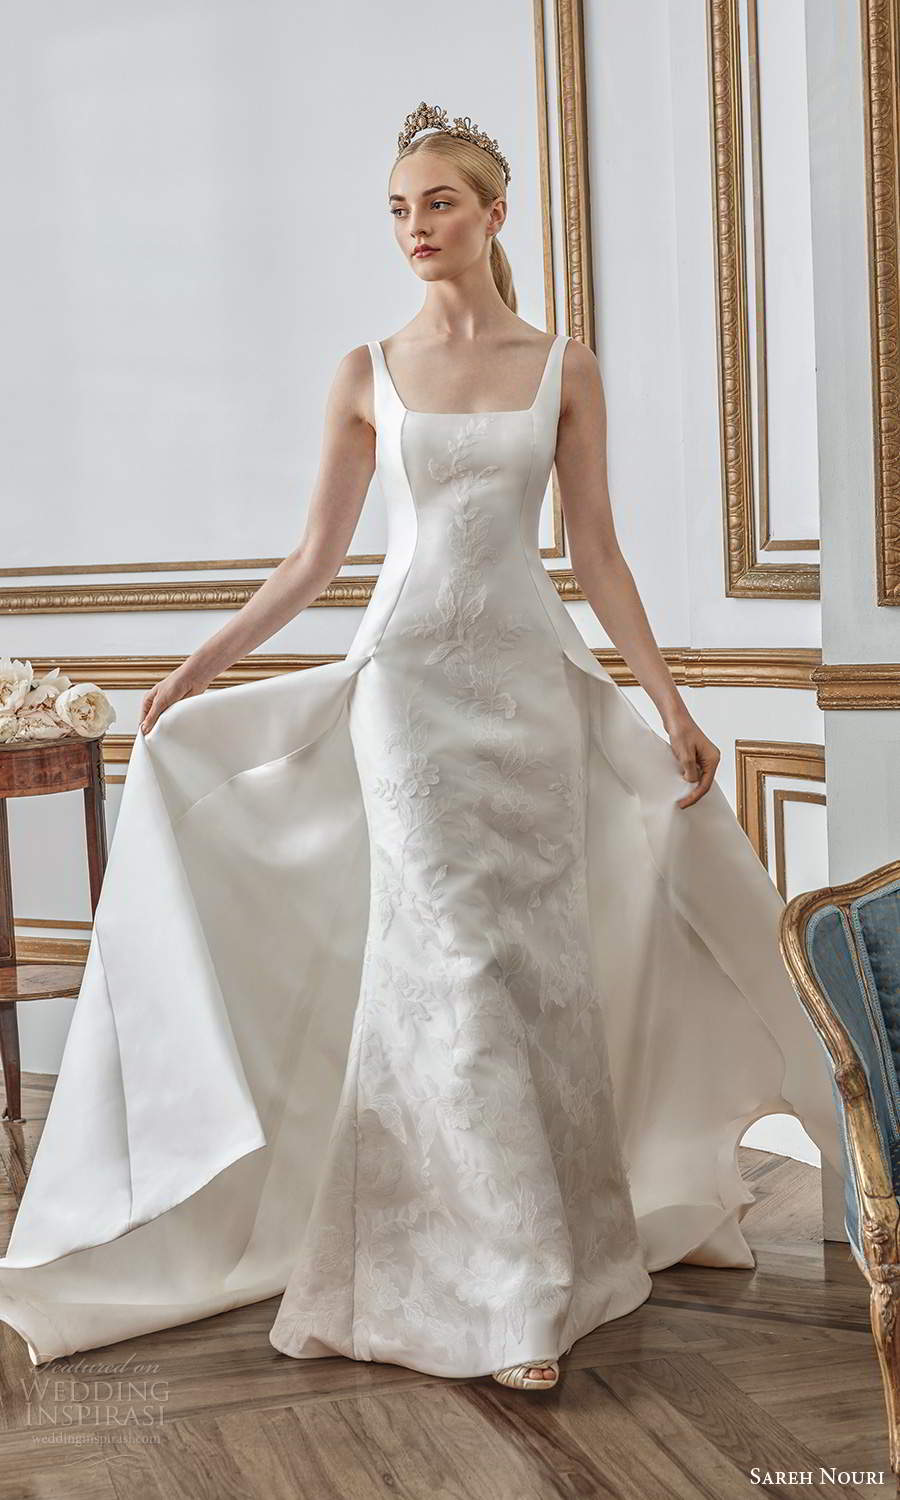 B, Flared wedding dress with square neckline